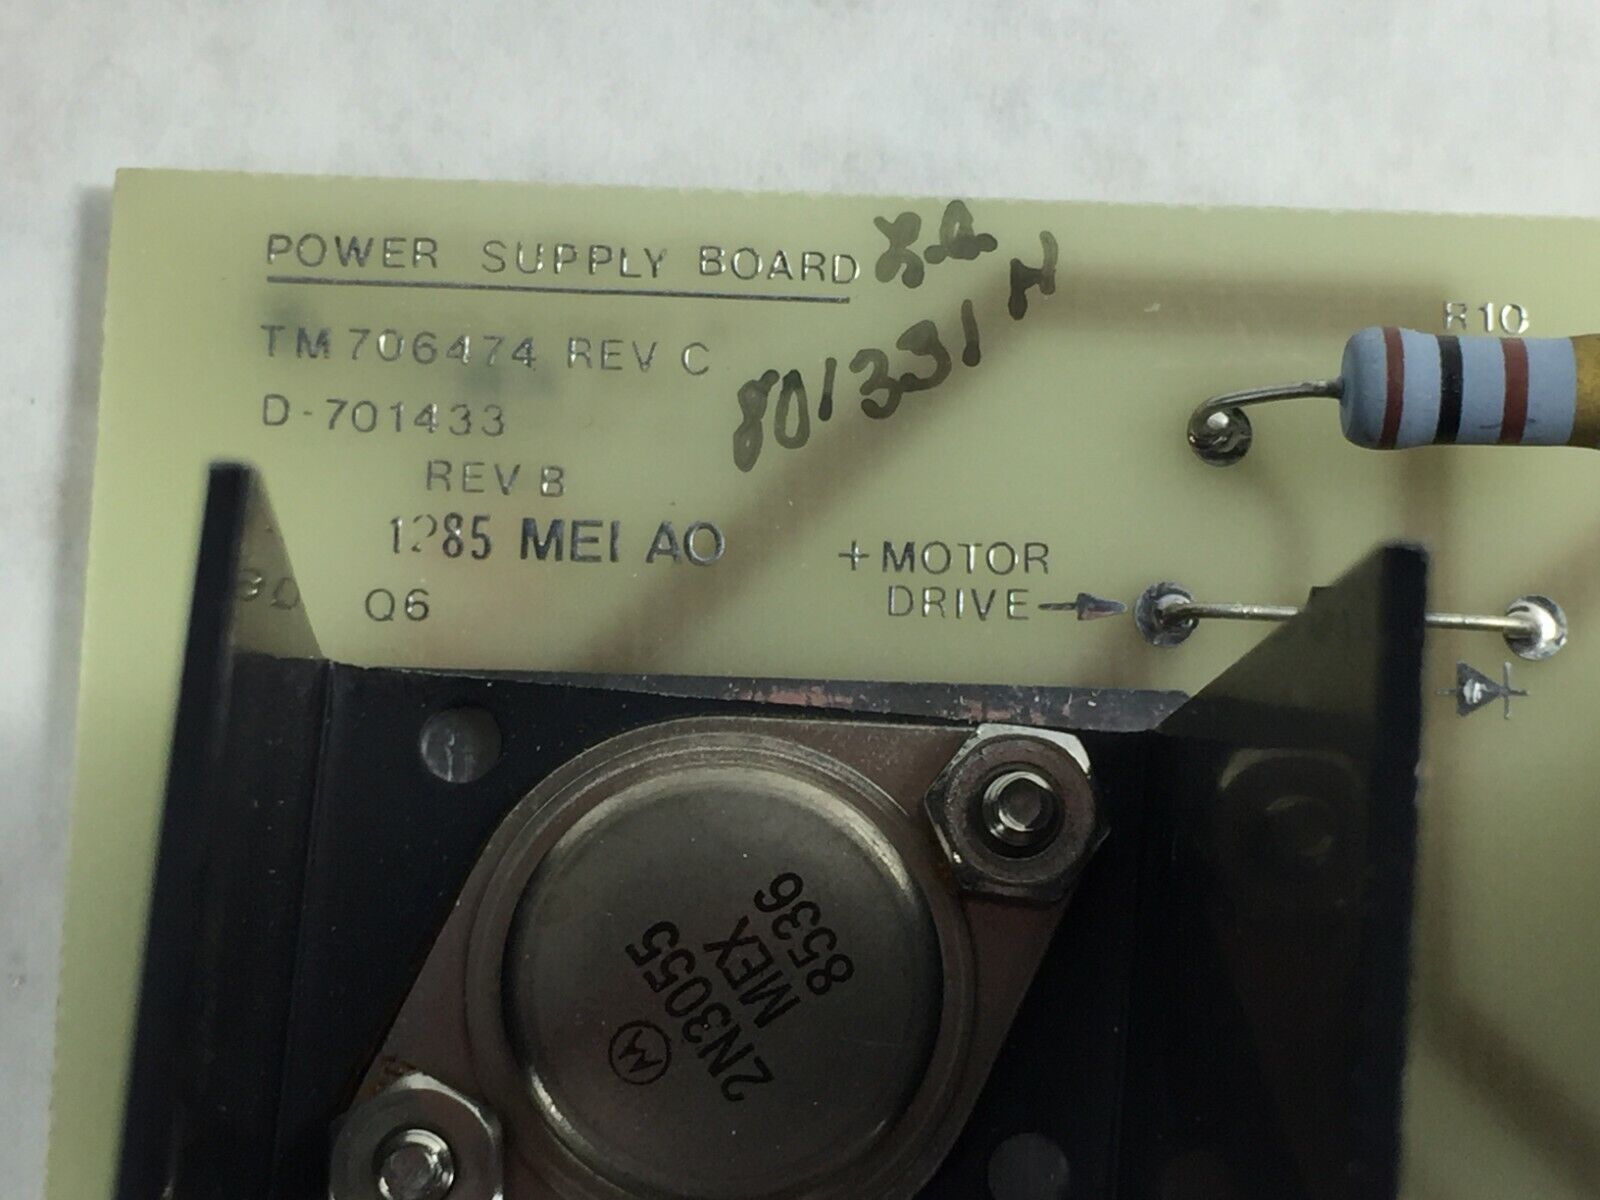 P/N 103046   Board Number 801331  Power Supply Board